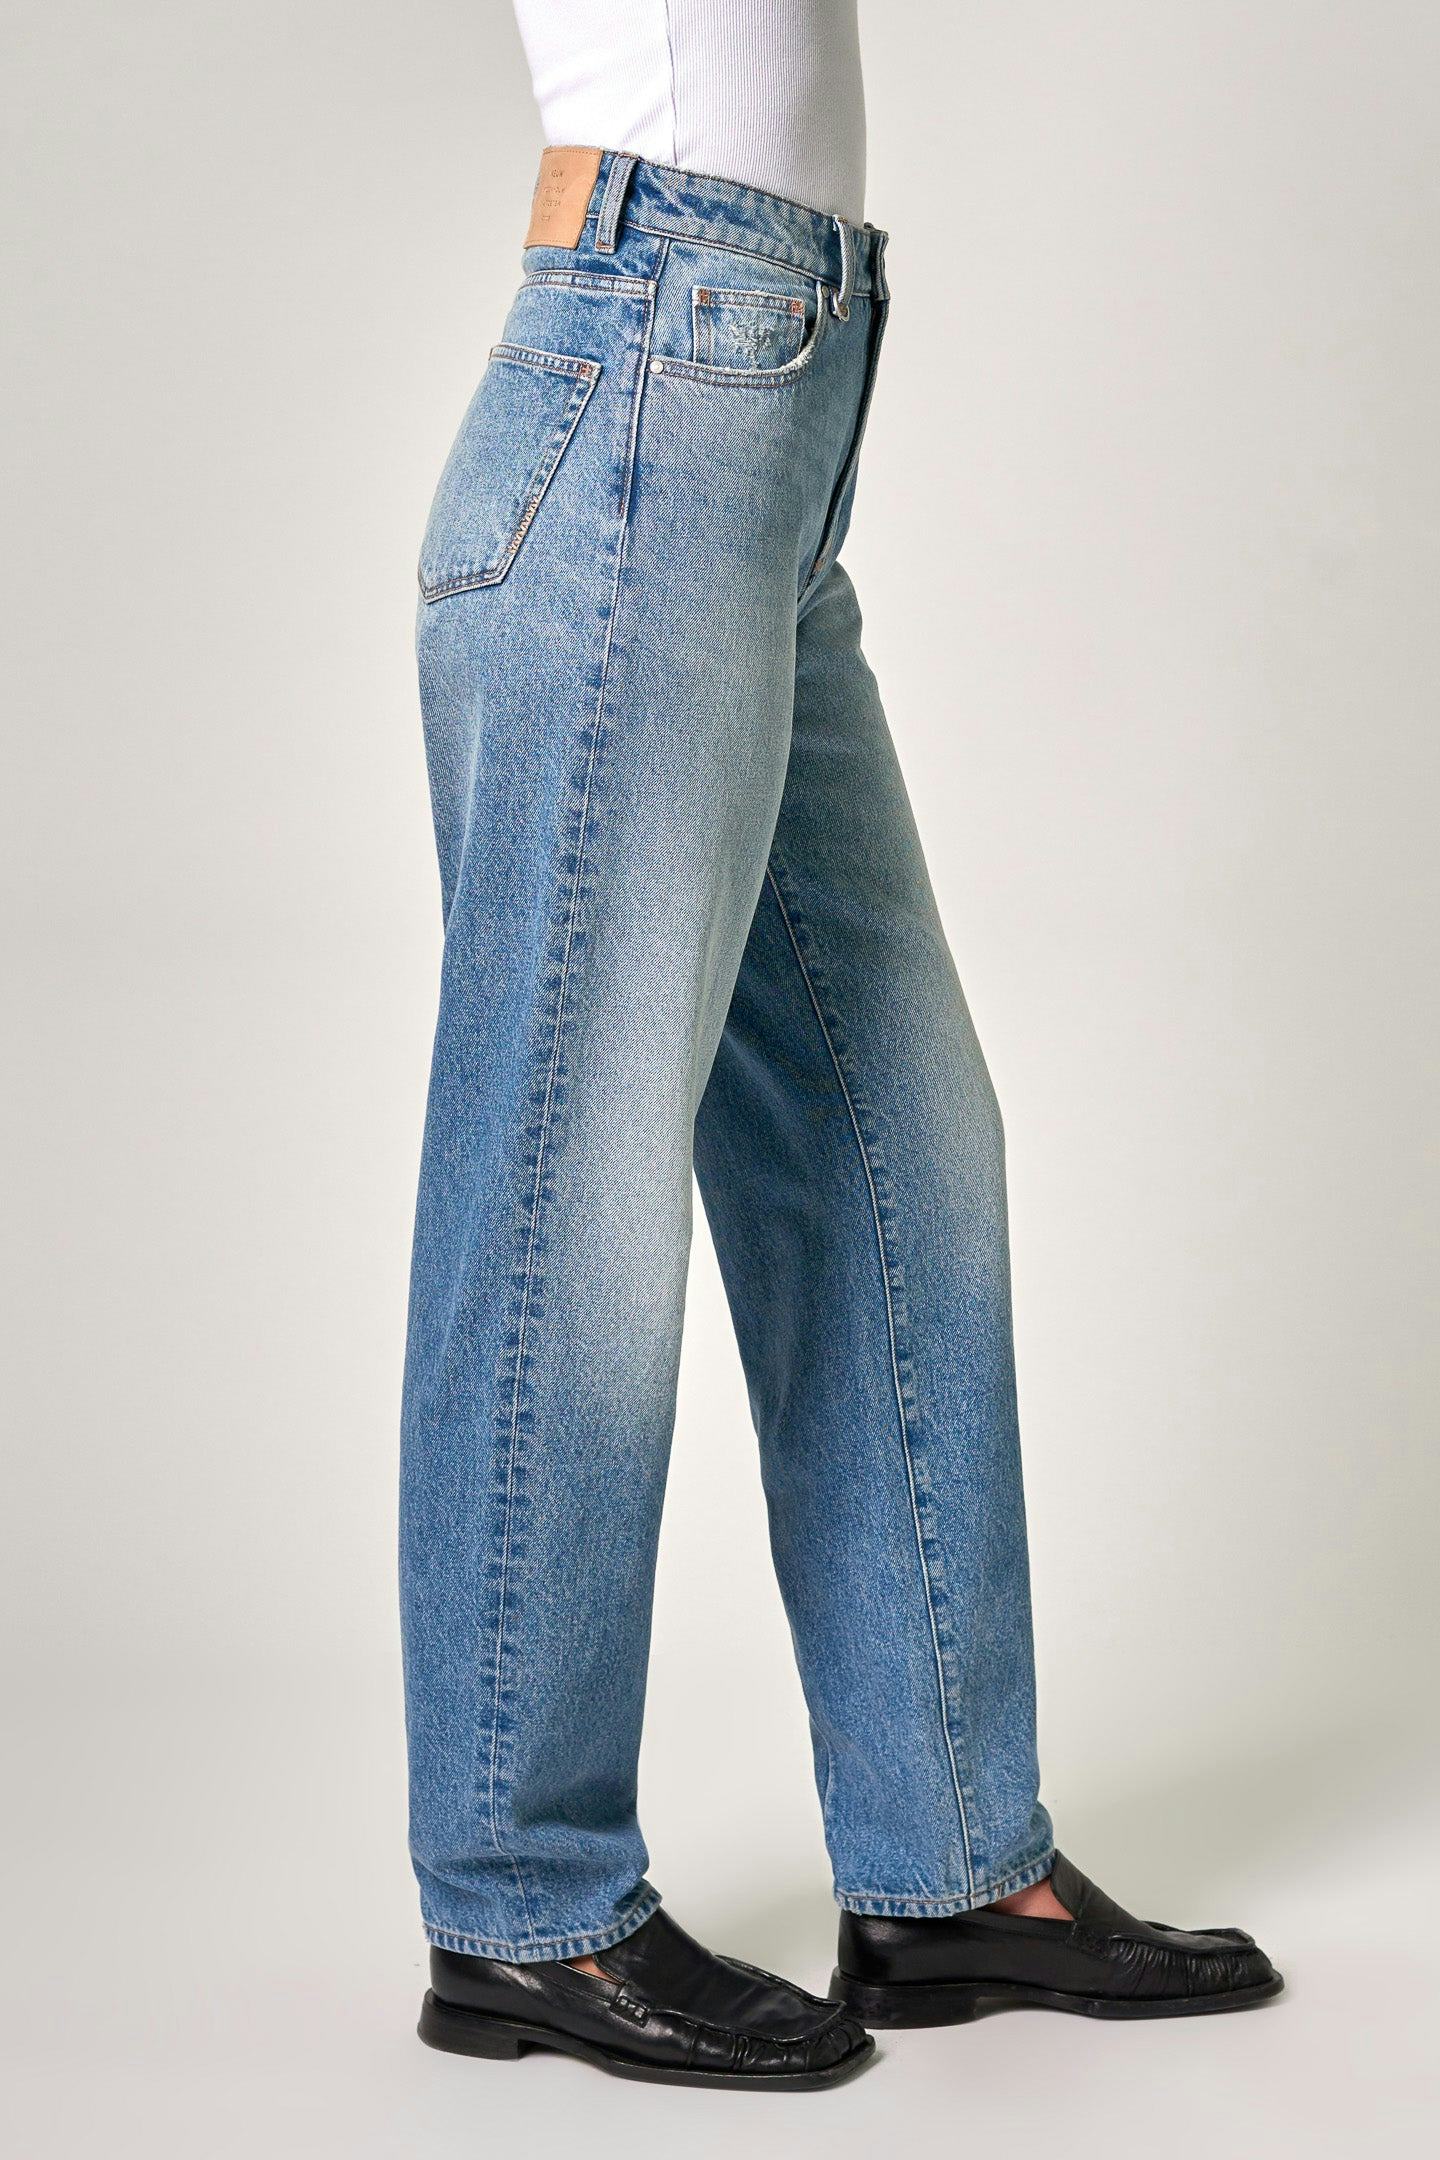 Low Rise Bootleg Jeans in Heavy Stitch Vintage Indigo